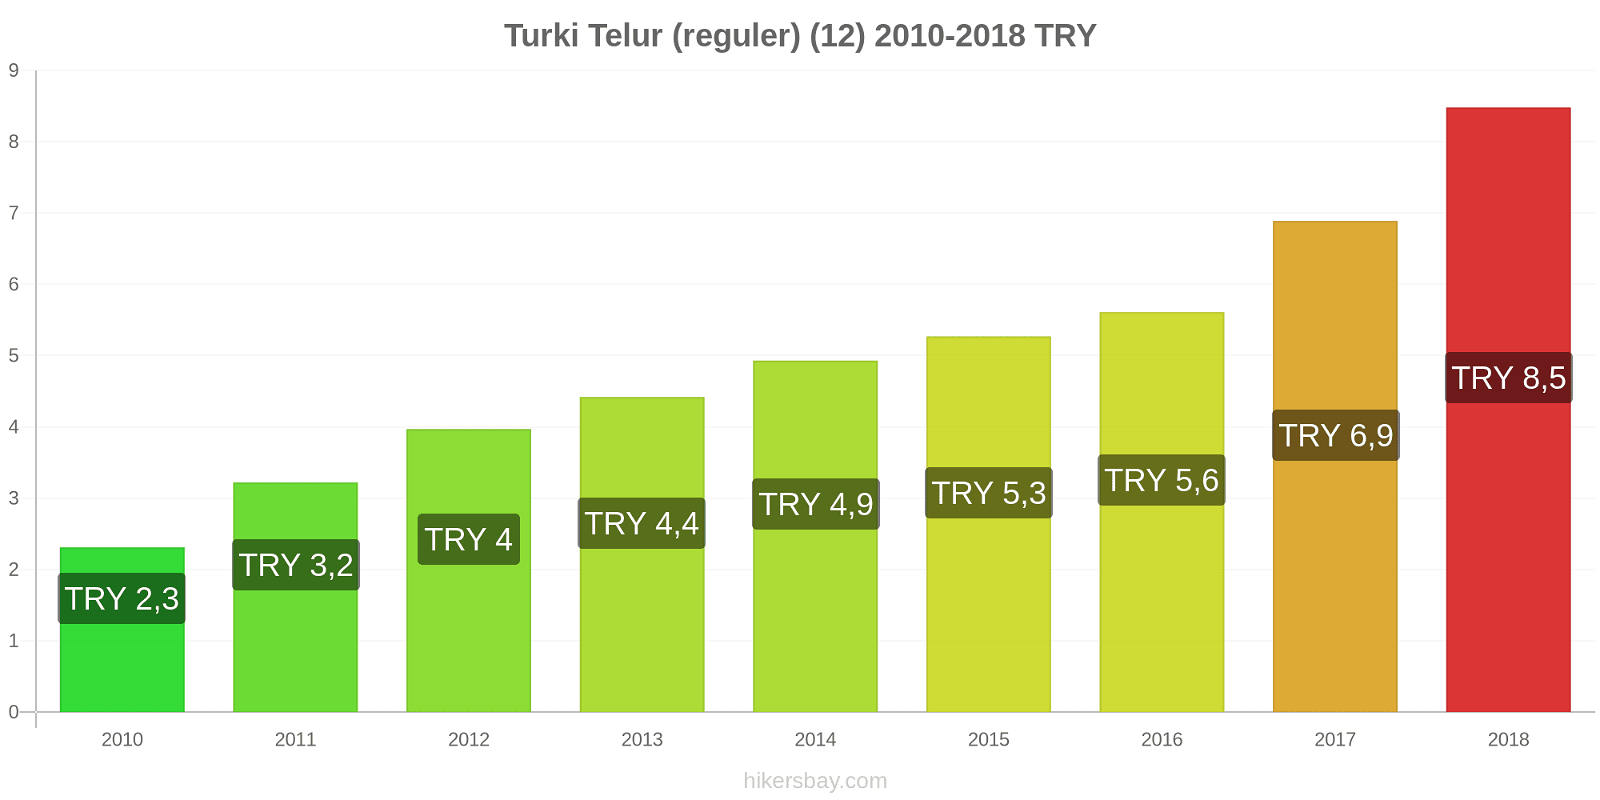 Turki perubahan harga Telur (biasa) (12) hikersbay.com